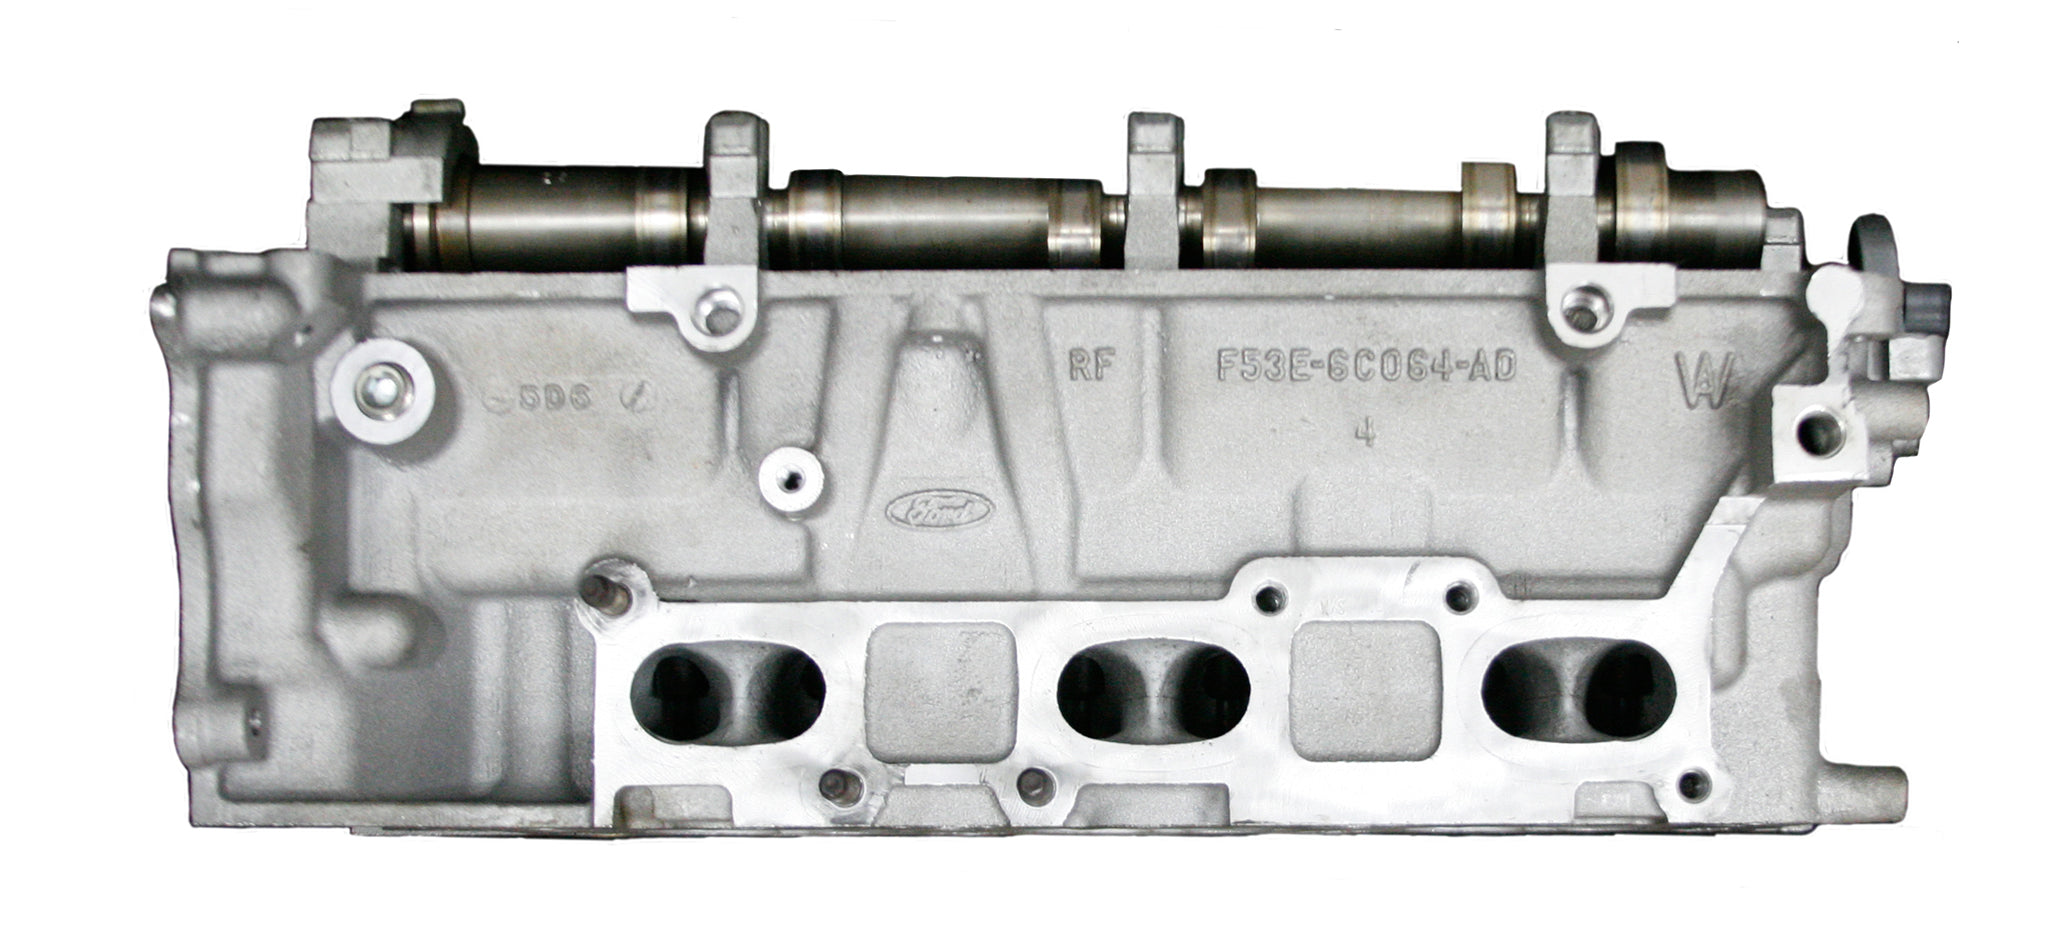 1995-2008 Ford Contour 2.5L DOHC Left Cylinder Head Casting # RF F53E 6C064 AD